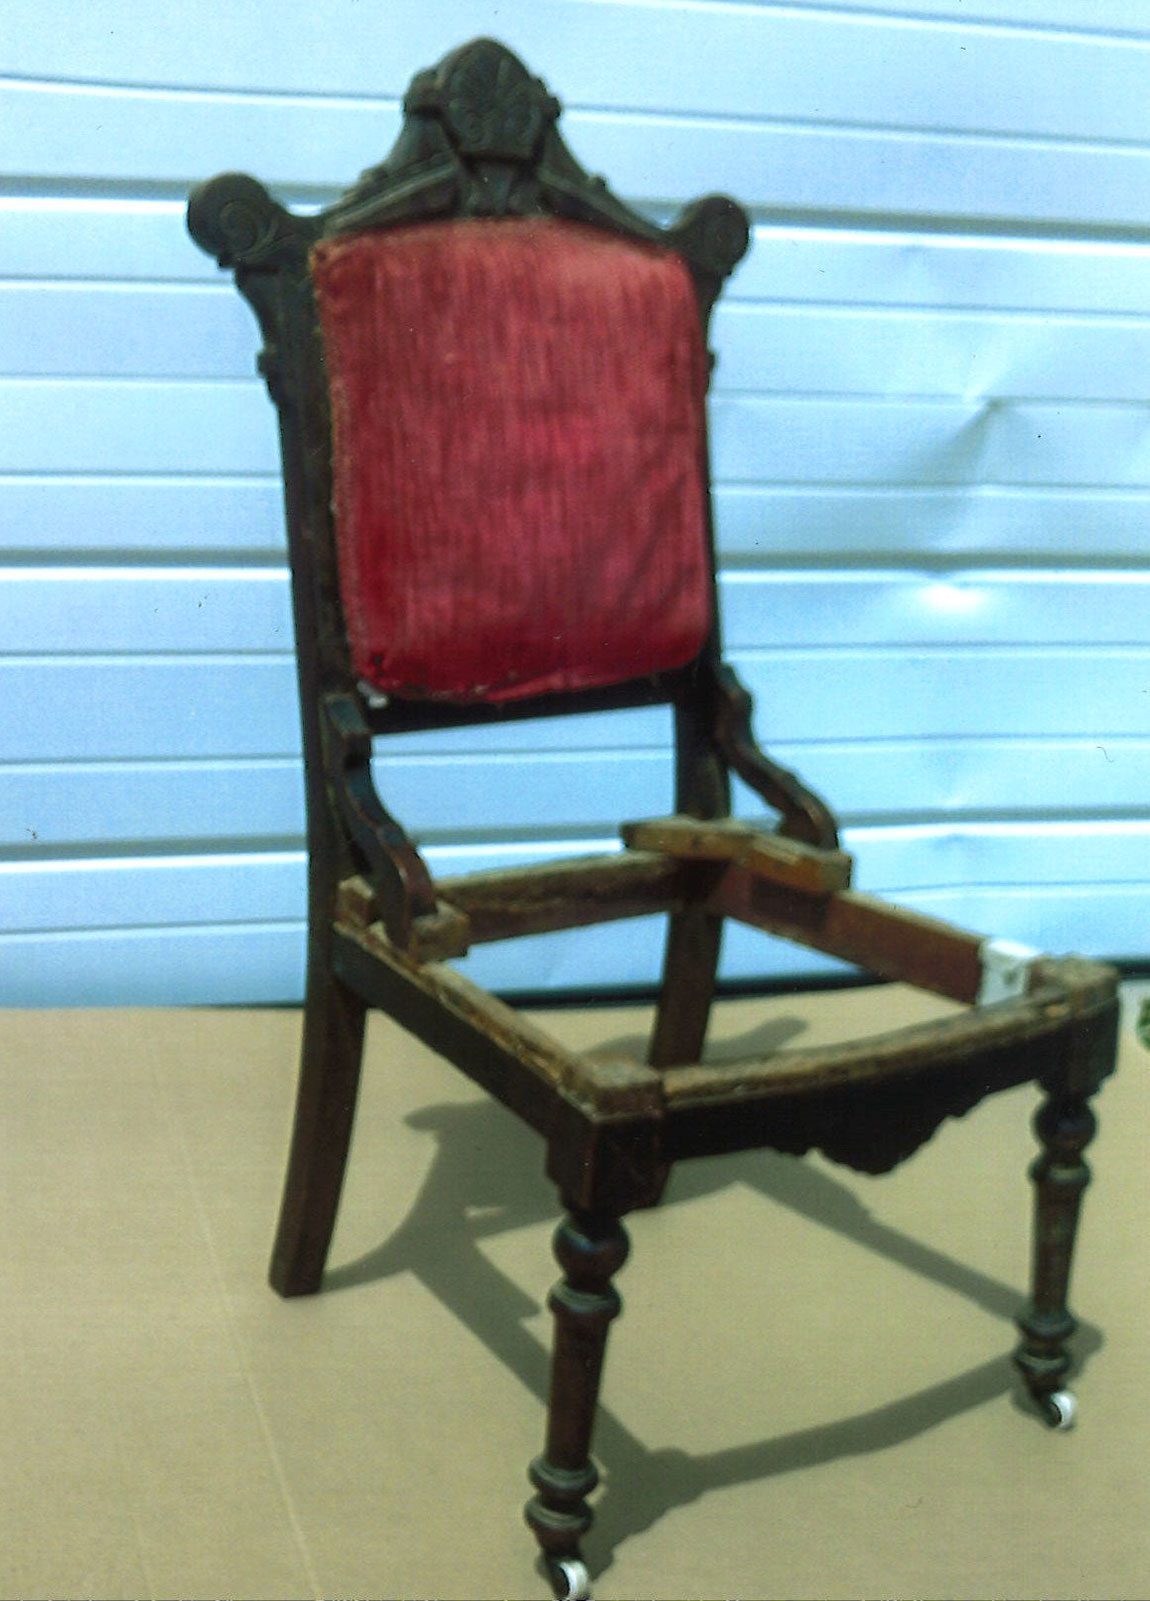 Chair restoration - before